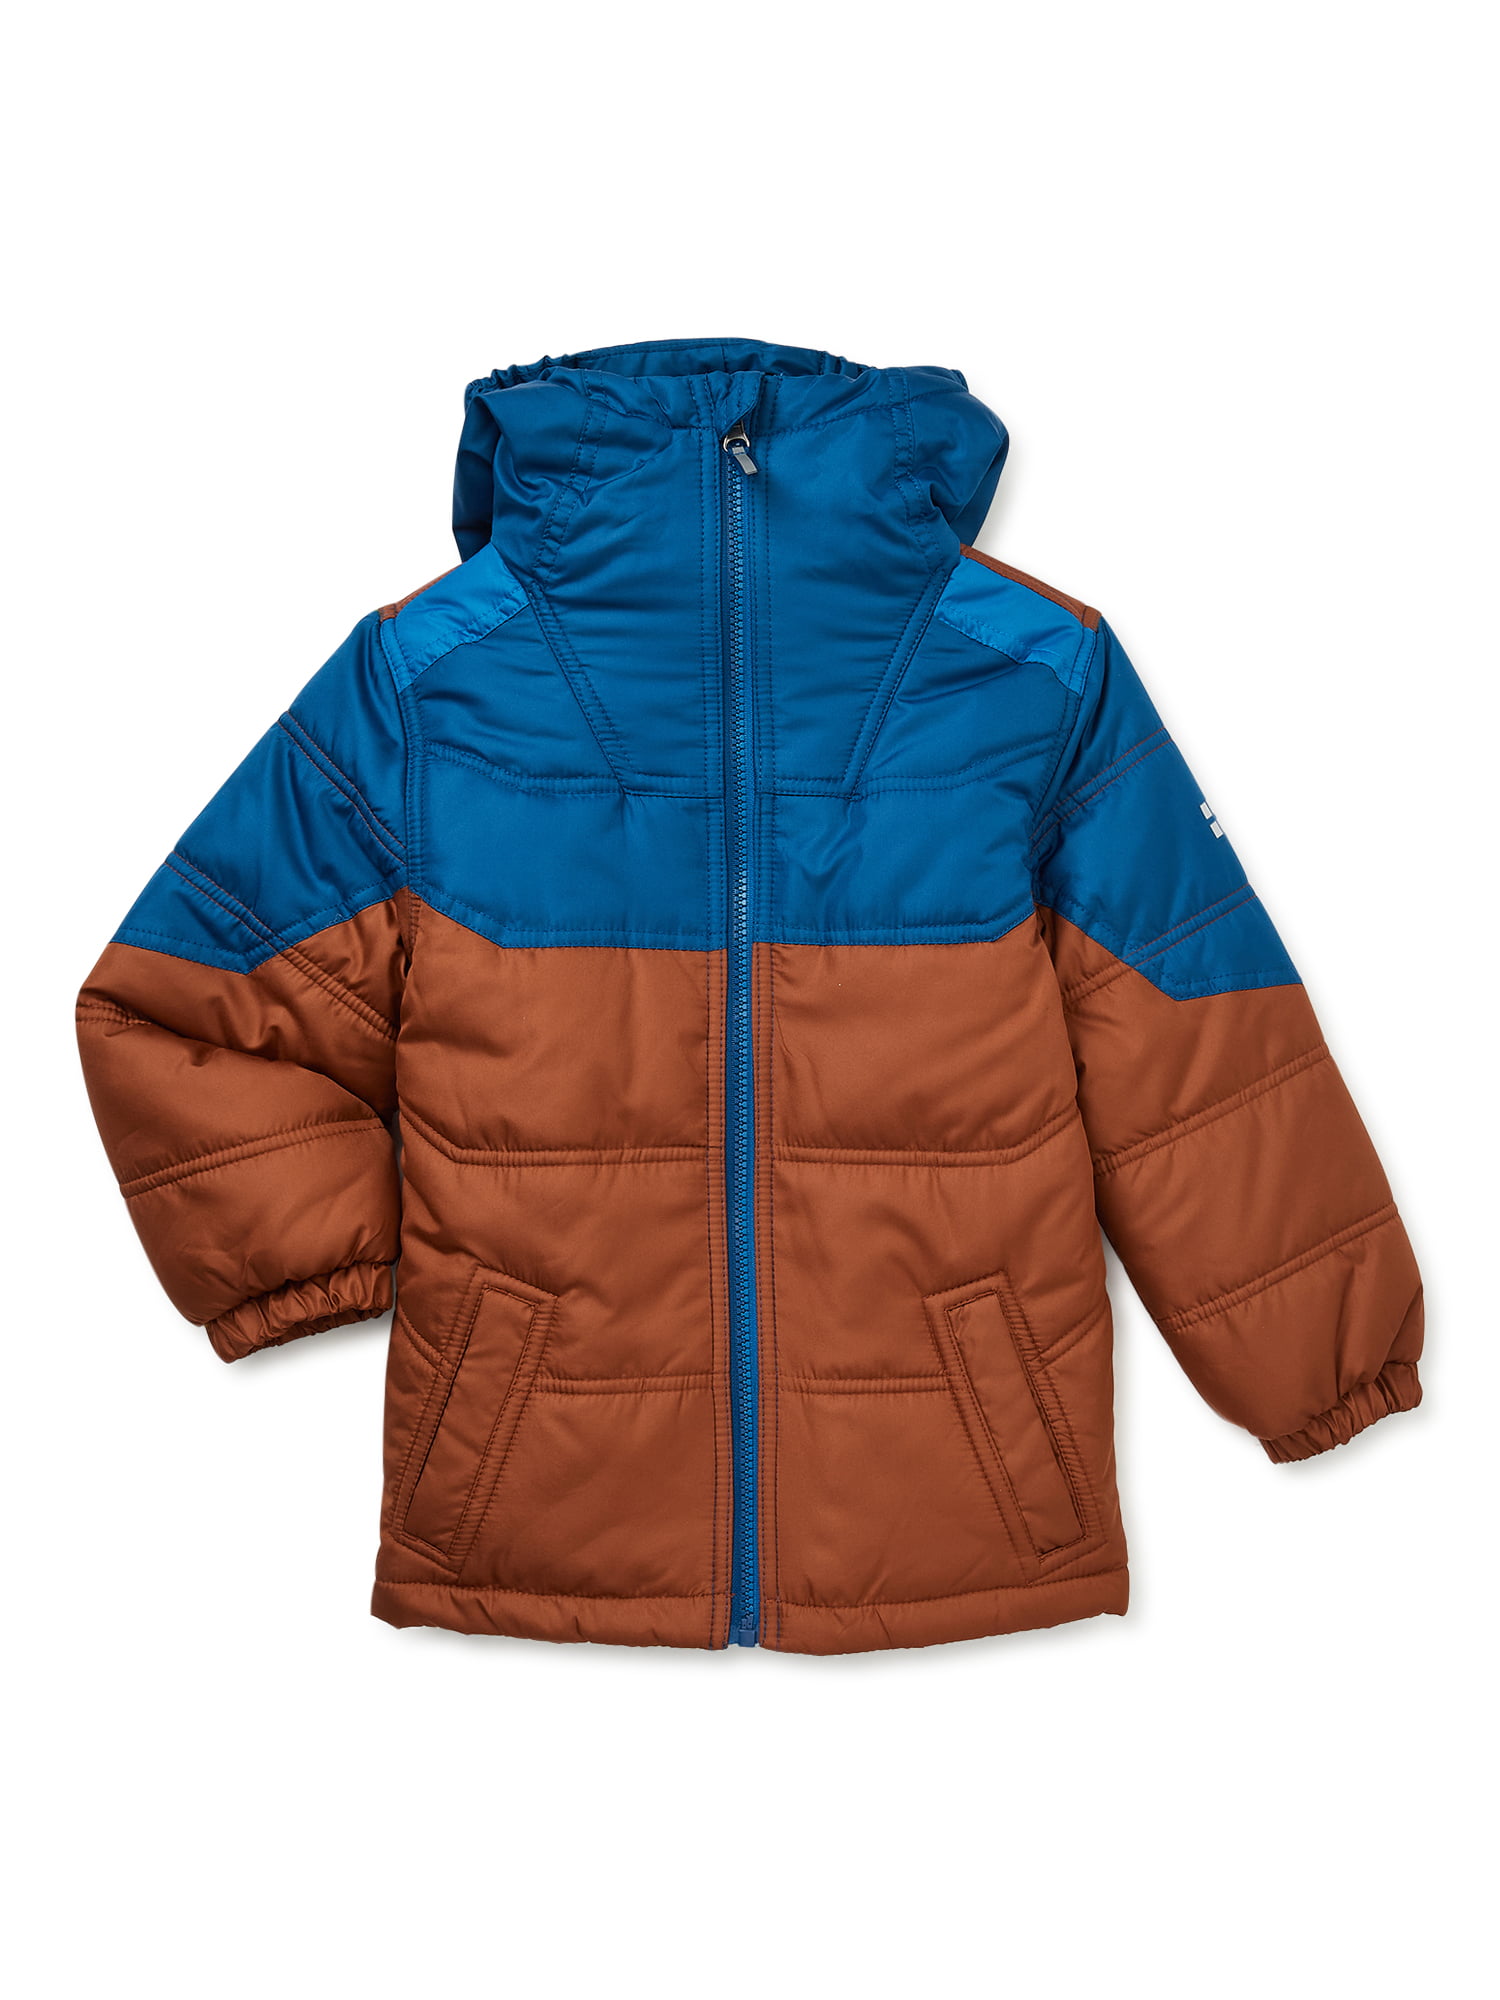 Swiss Alps Boys High Neck Puffer Jacket with Hood, Sizes 4-16 - Walmart.com